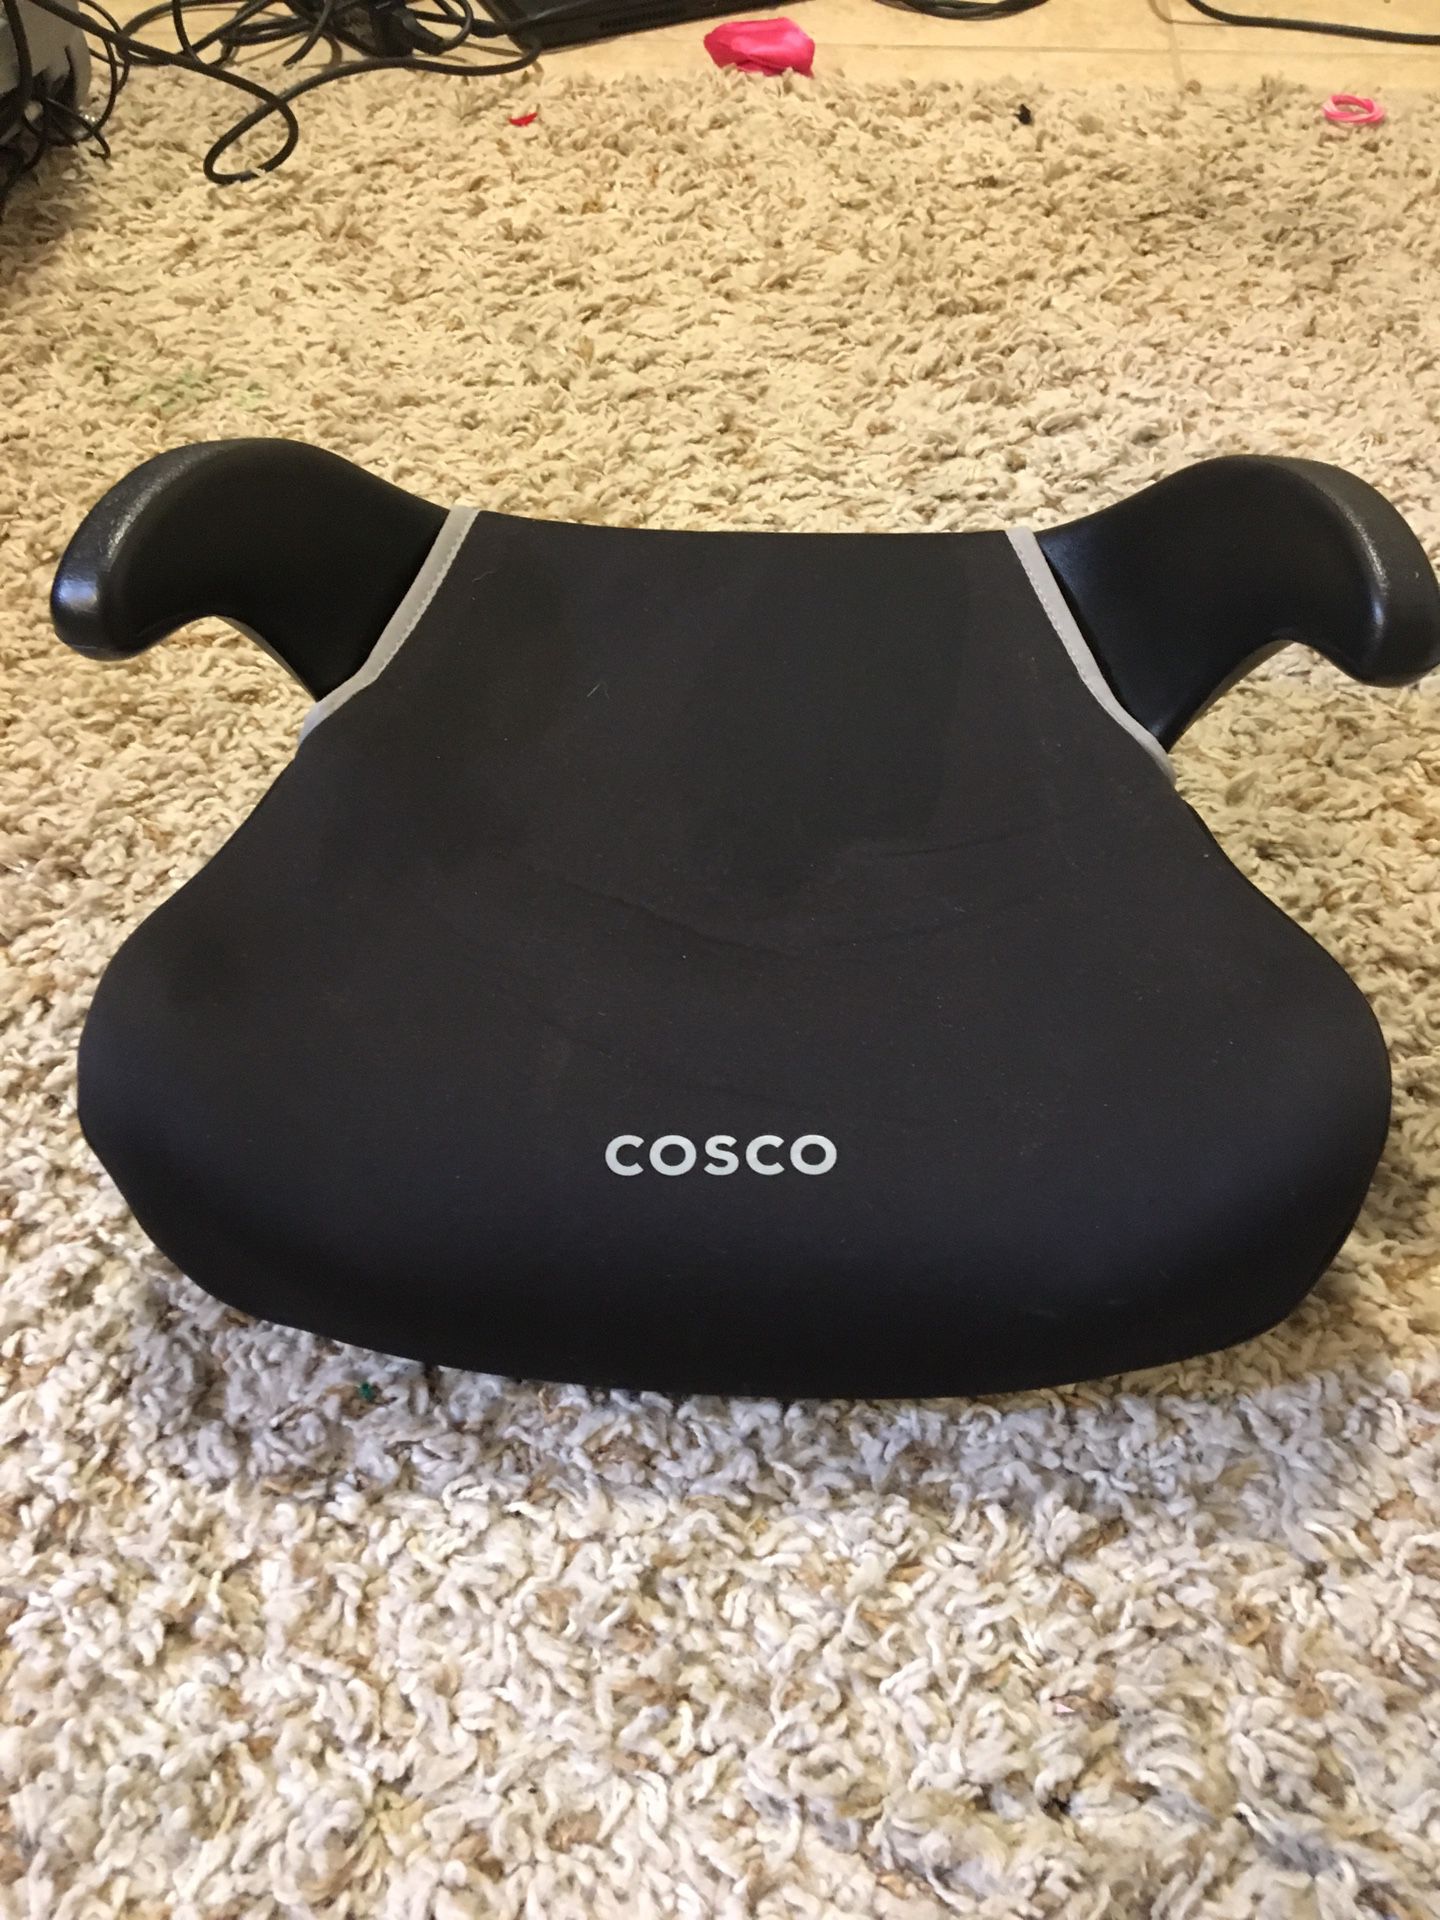 Cosco brand booster seat